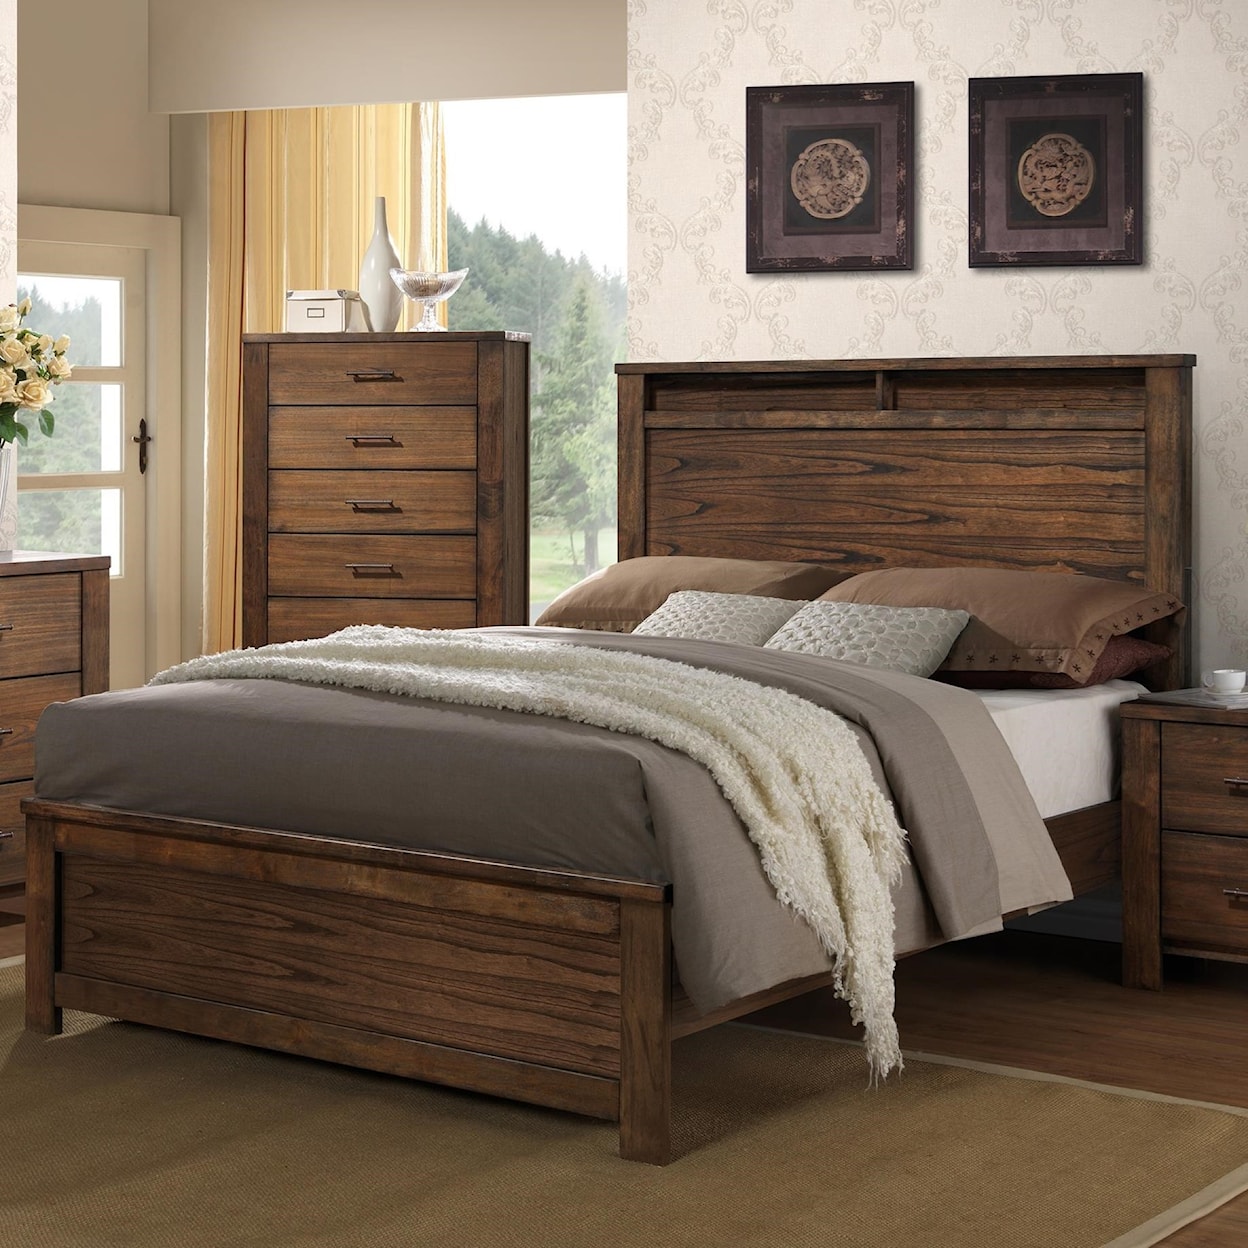 Progressive Furniture Brayden 6/6 King Complete Bed